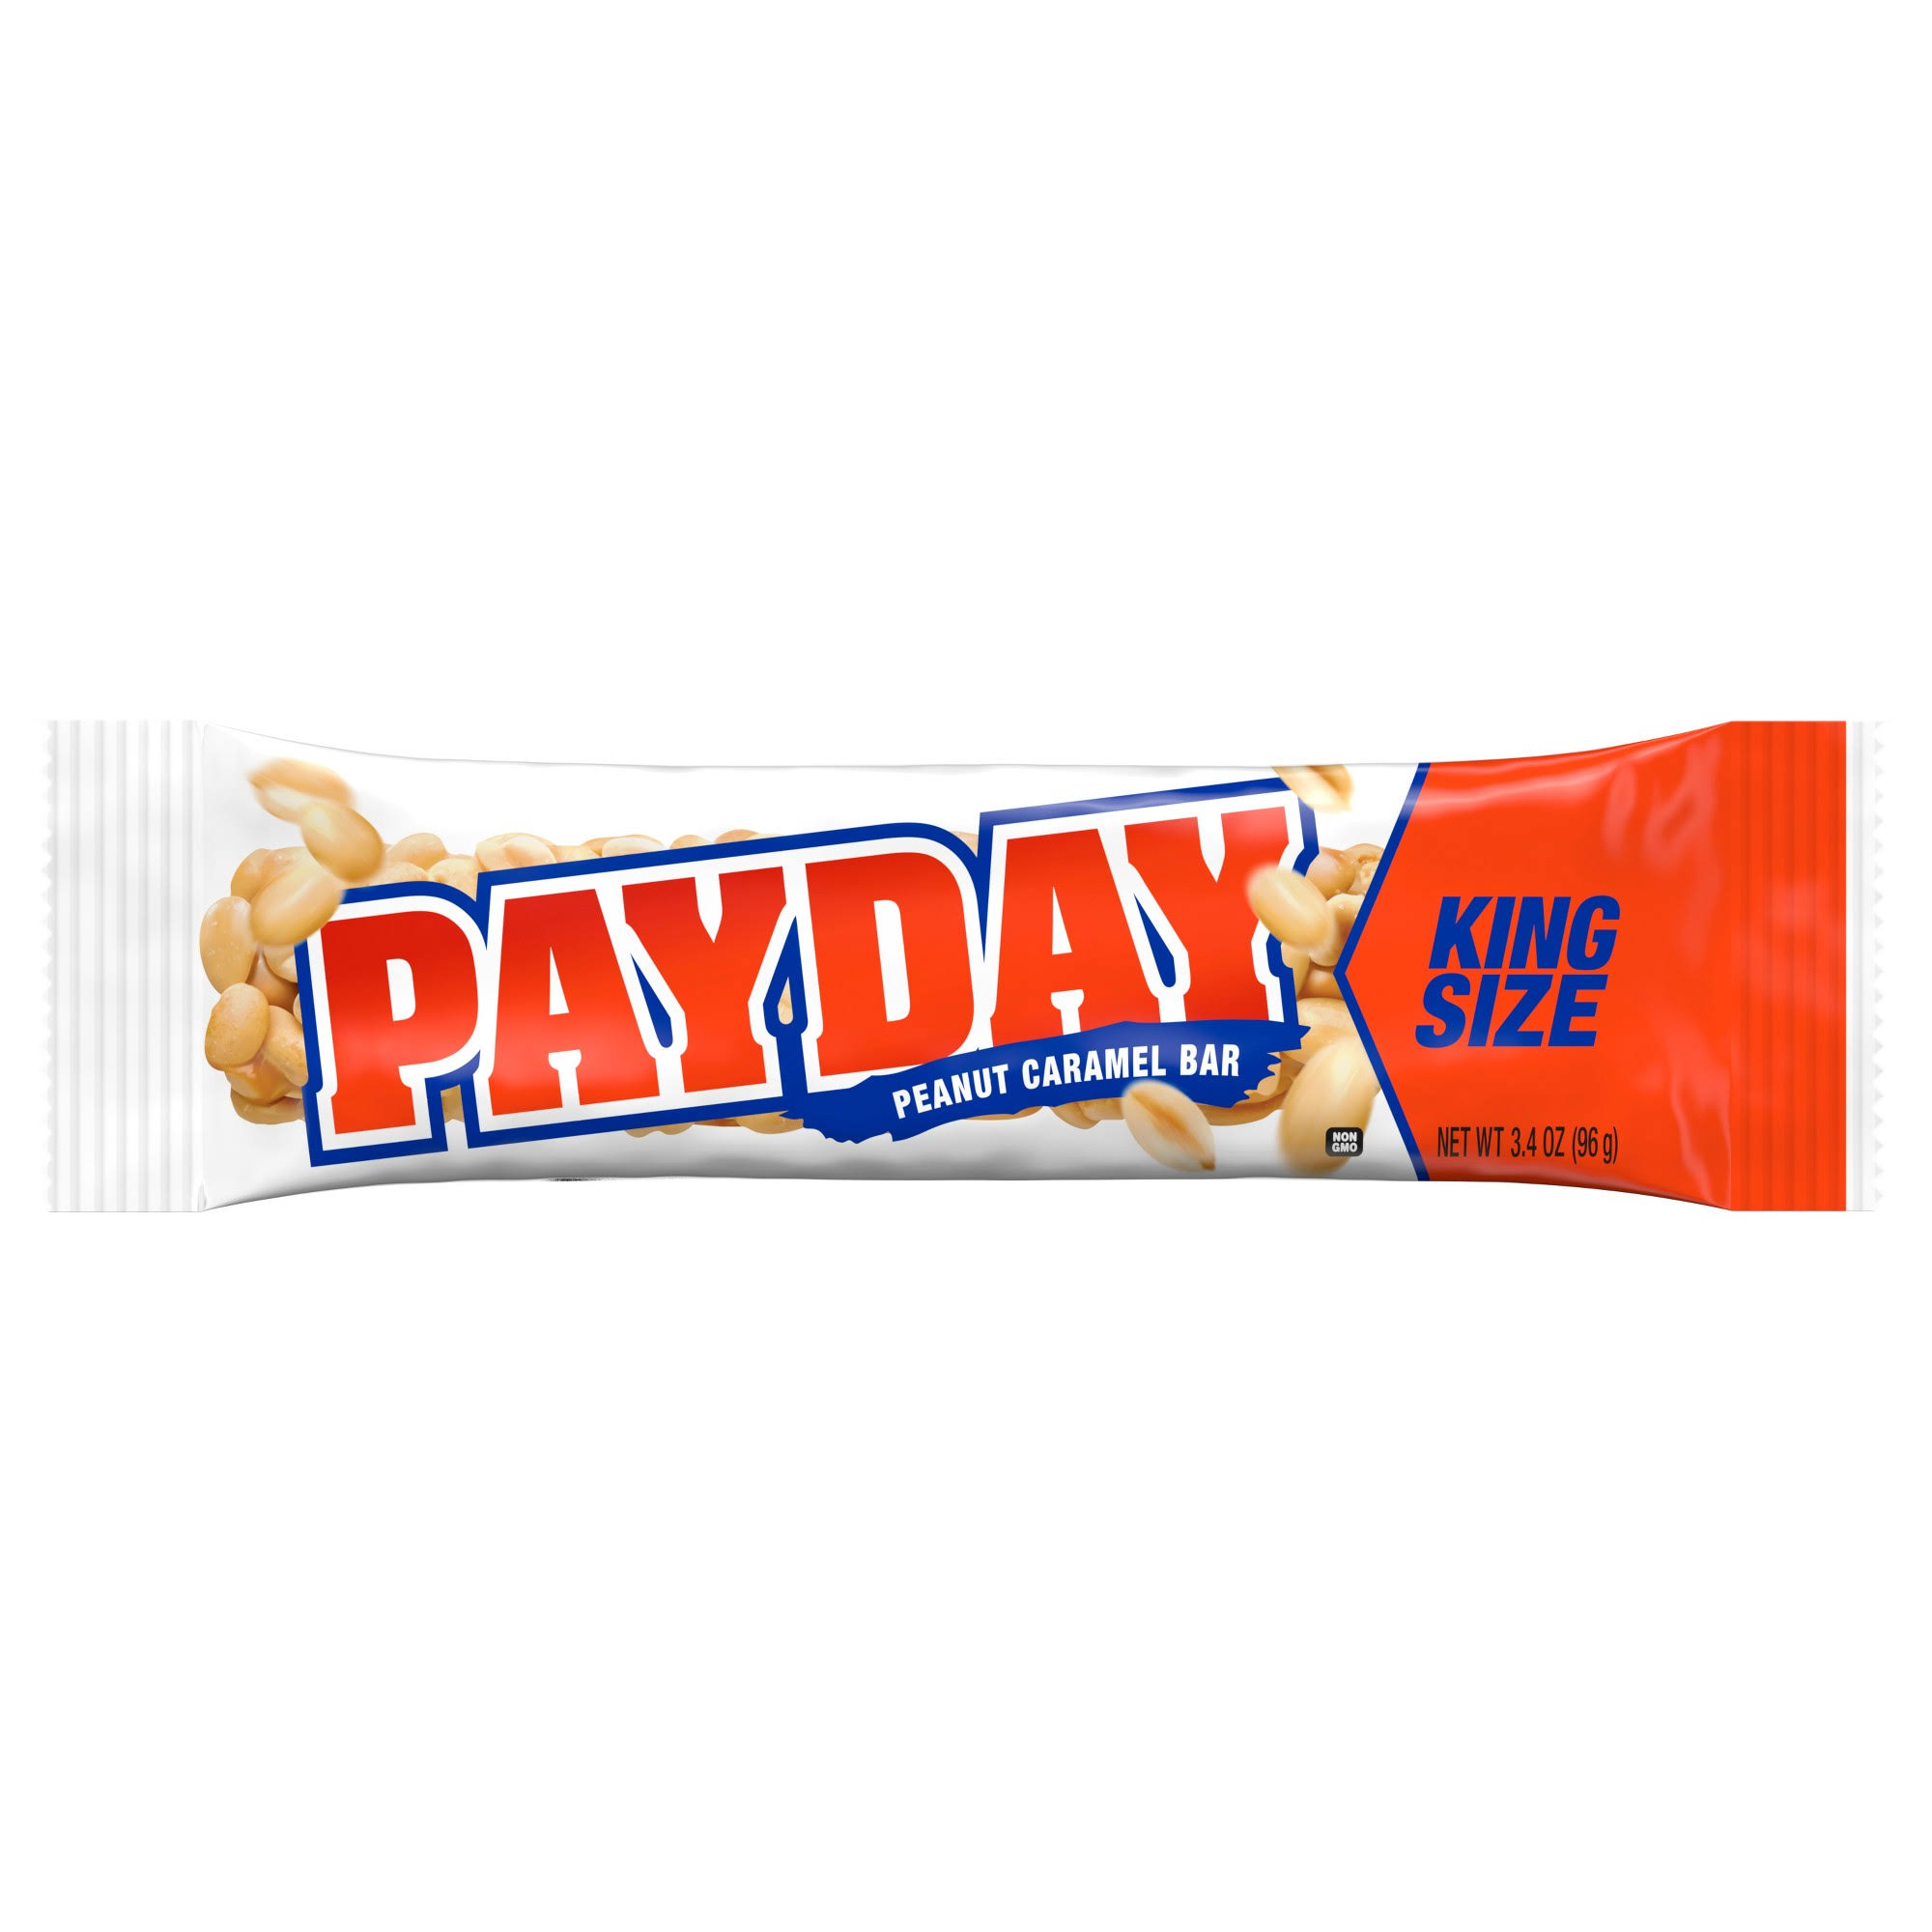 Payday Peanut Caramel Bar - King Size, 3.4oz